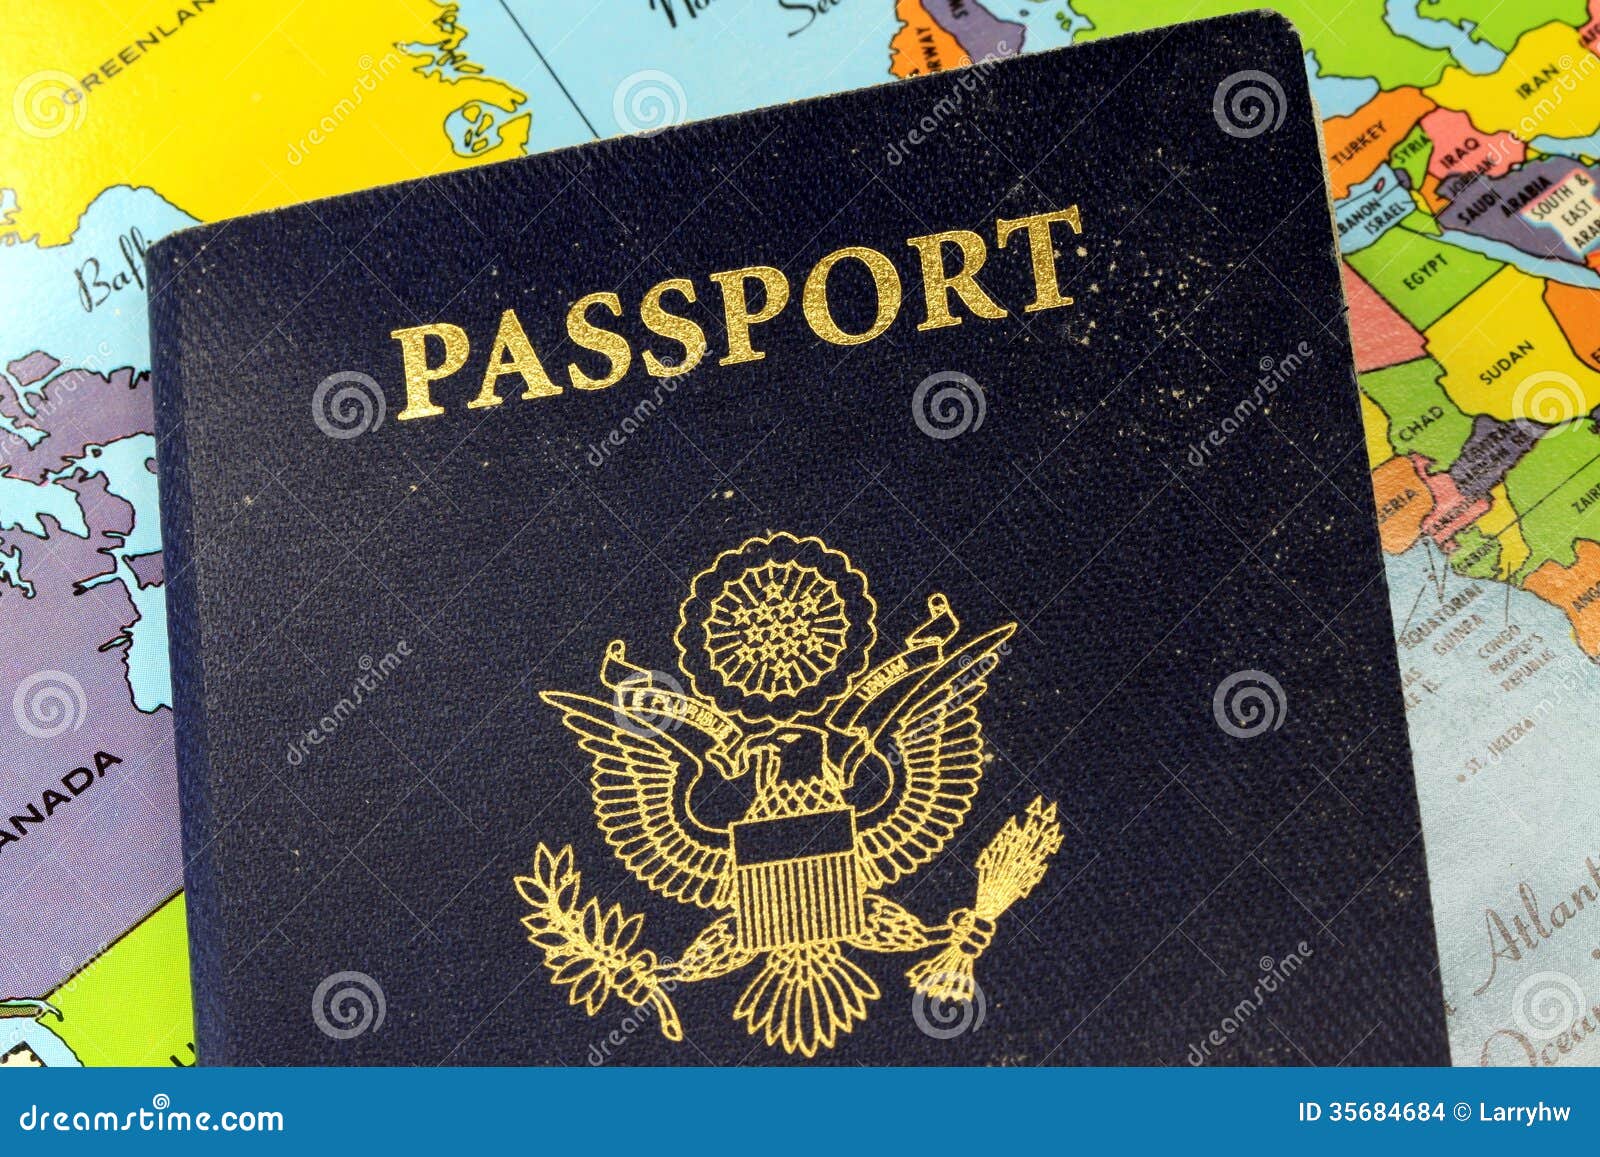 us passport travel map